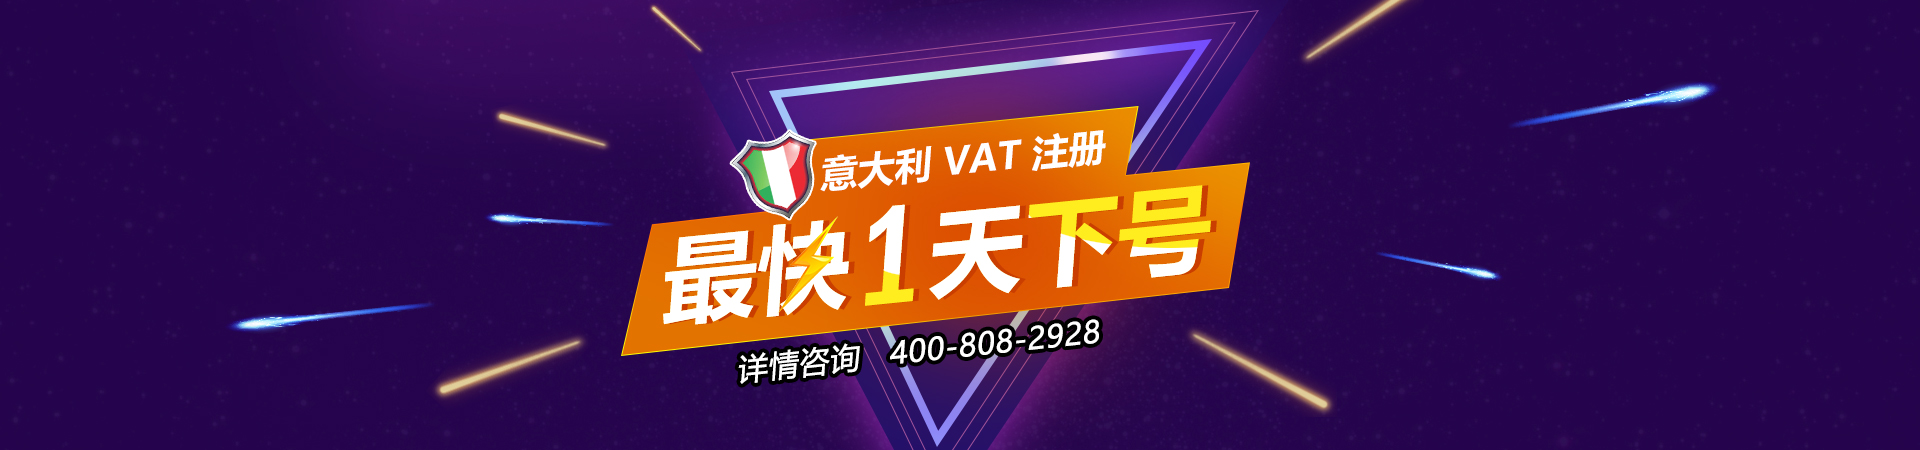 VAT注册,英国VAT申报,深圳VAT注册公司